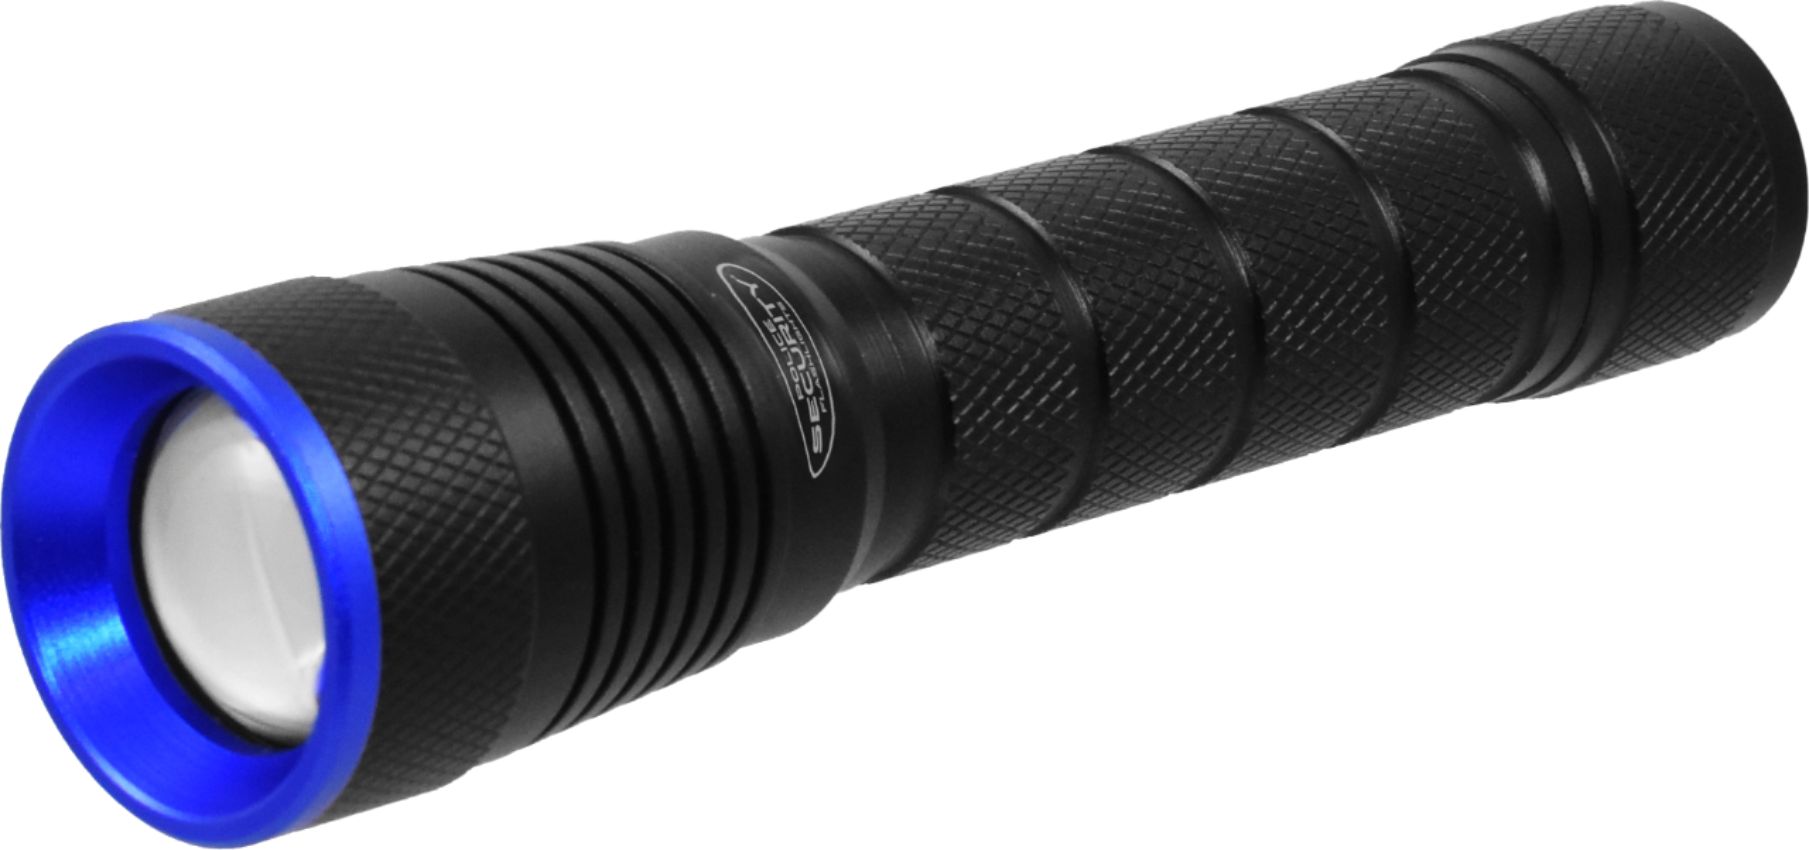 Police Security Elite 3300 Lumen LED Flashlight Black 98409 - Best Buy